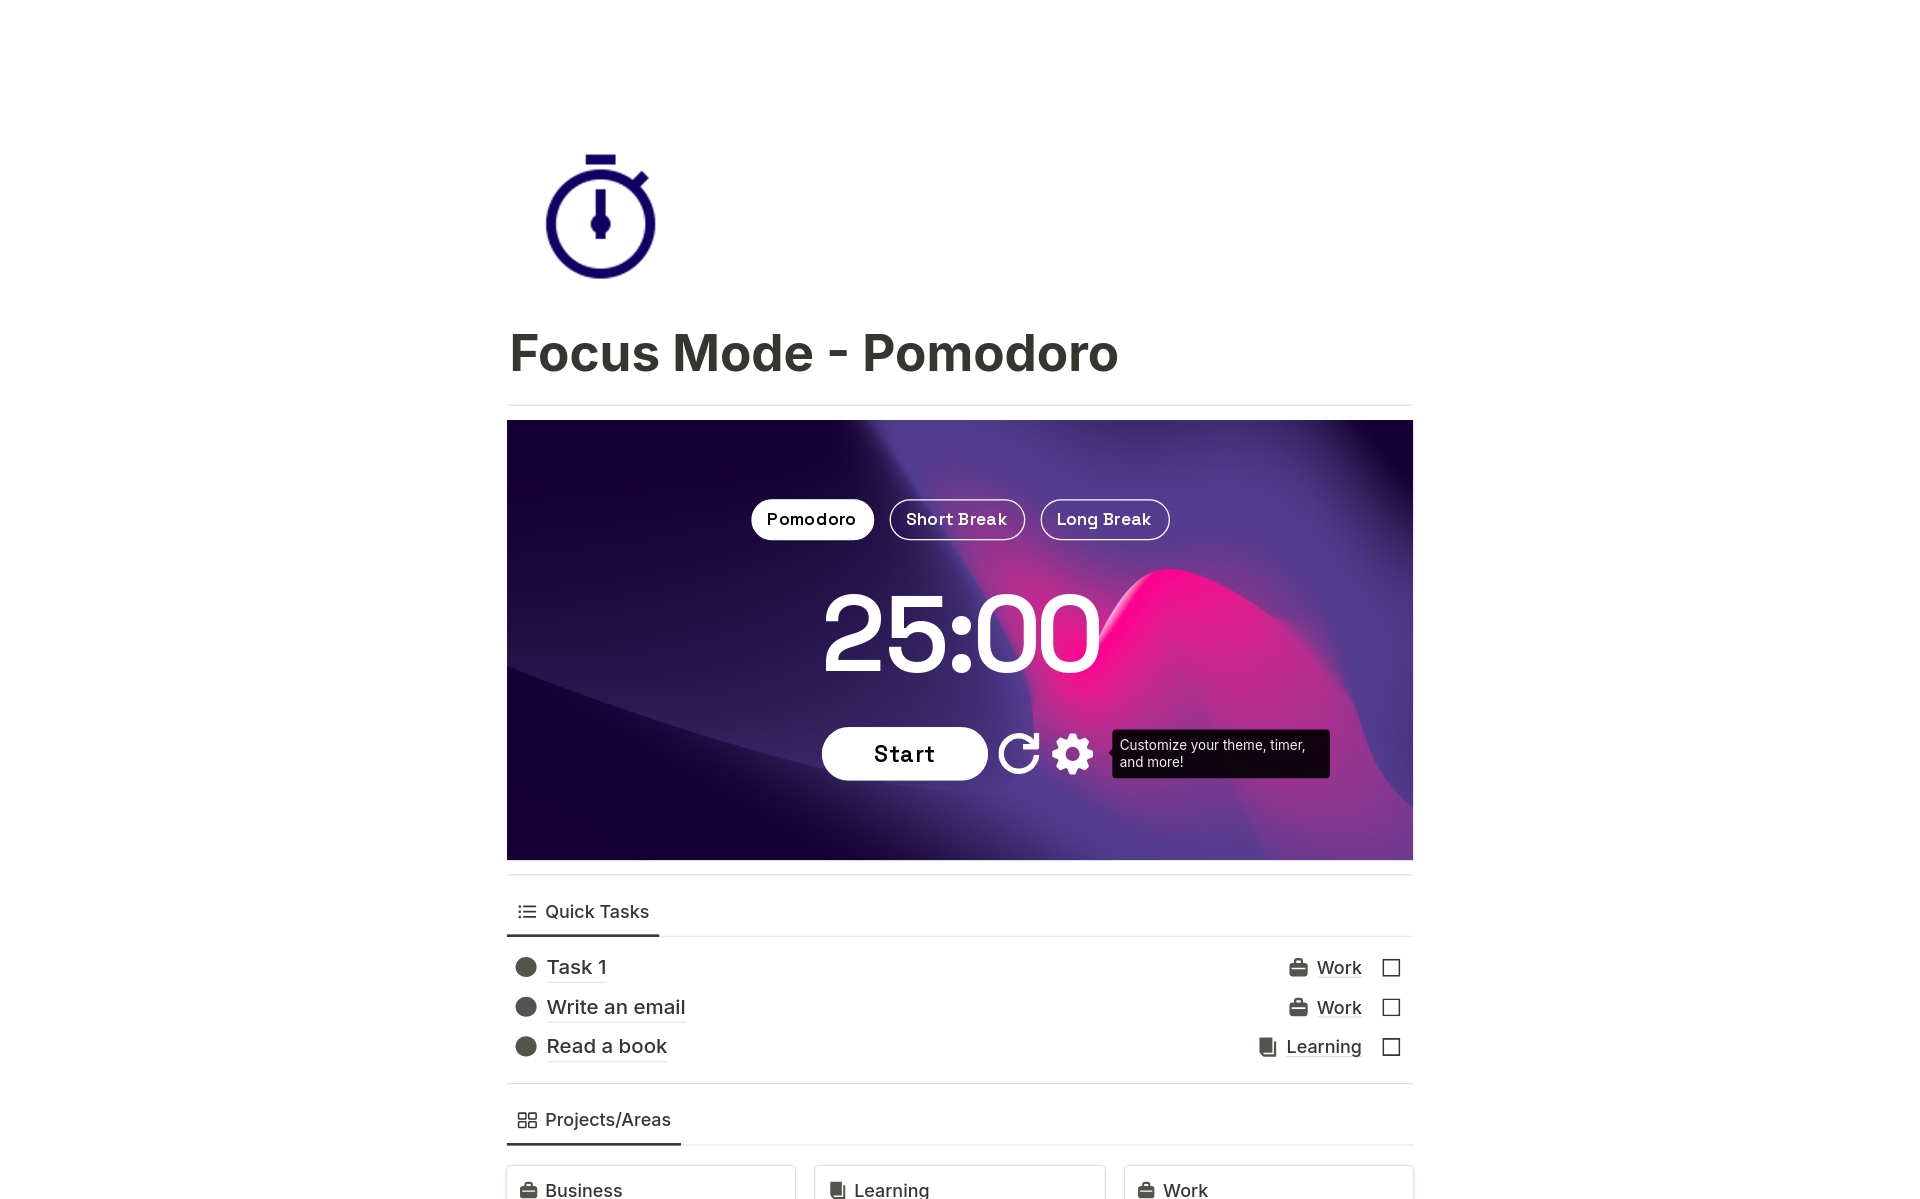 Aperçu du modèle de Focus Mode - Pomodoro